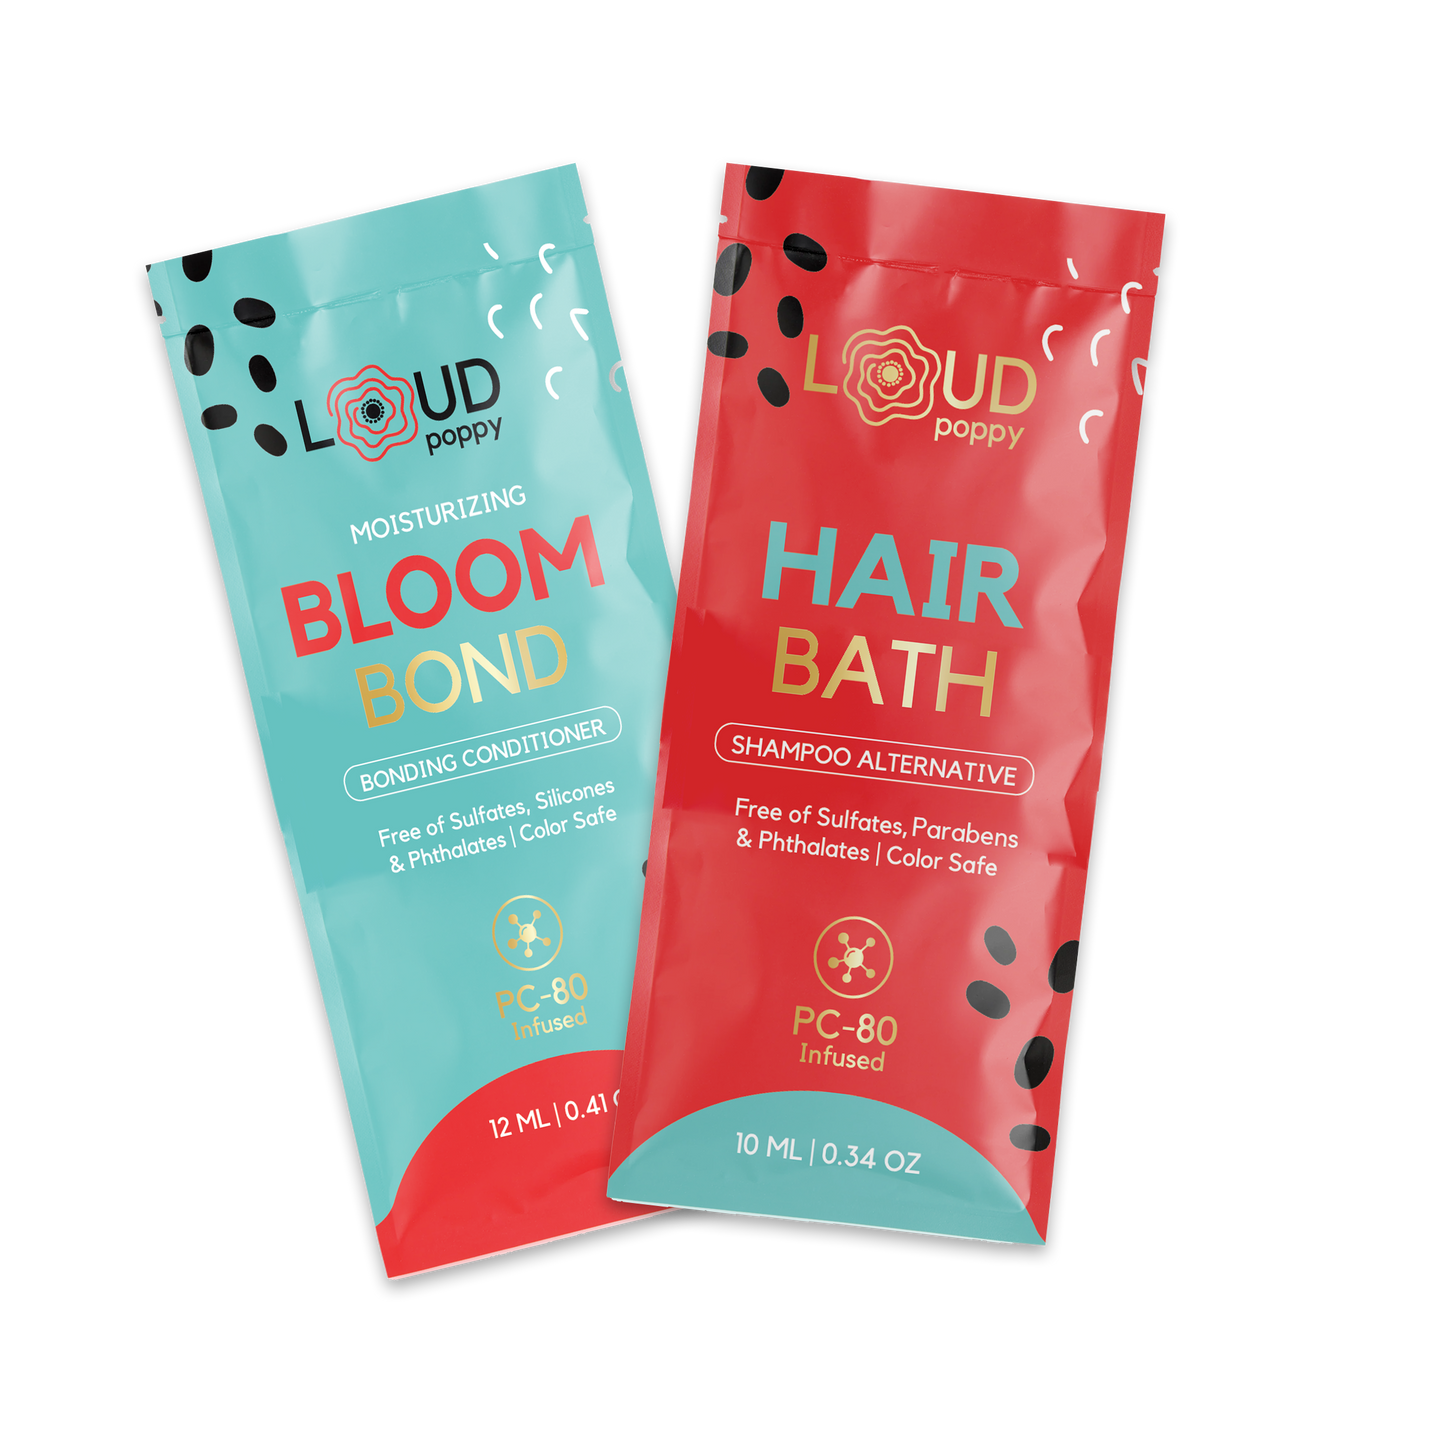 Loud Poppy Hair Care Duo: Sample Size Hair Bath & Bloom Bond Conditioner - Vegan, Cruelty-Free